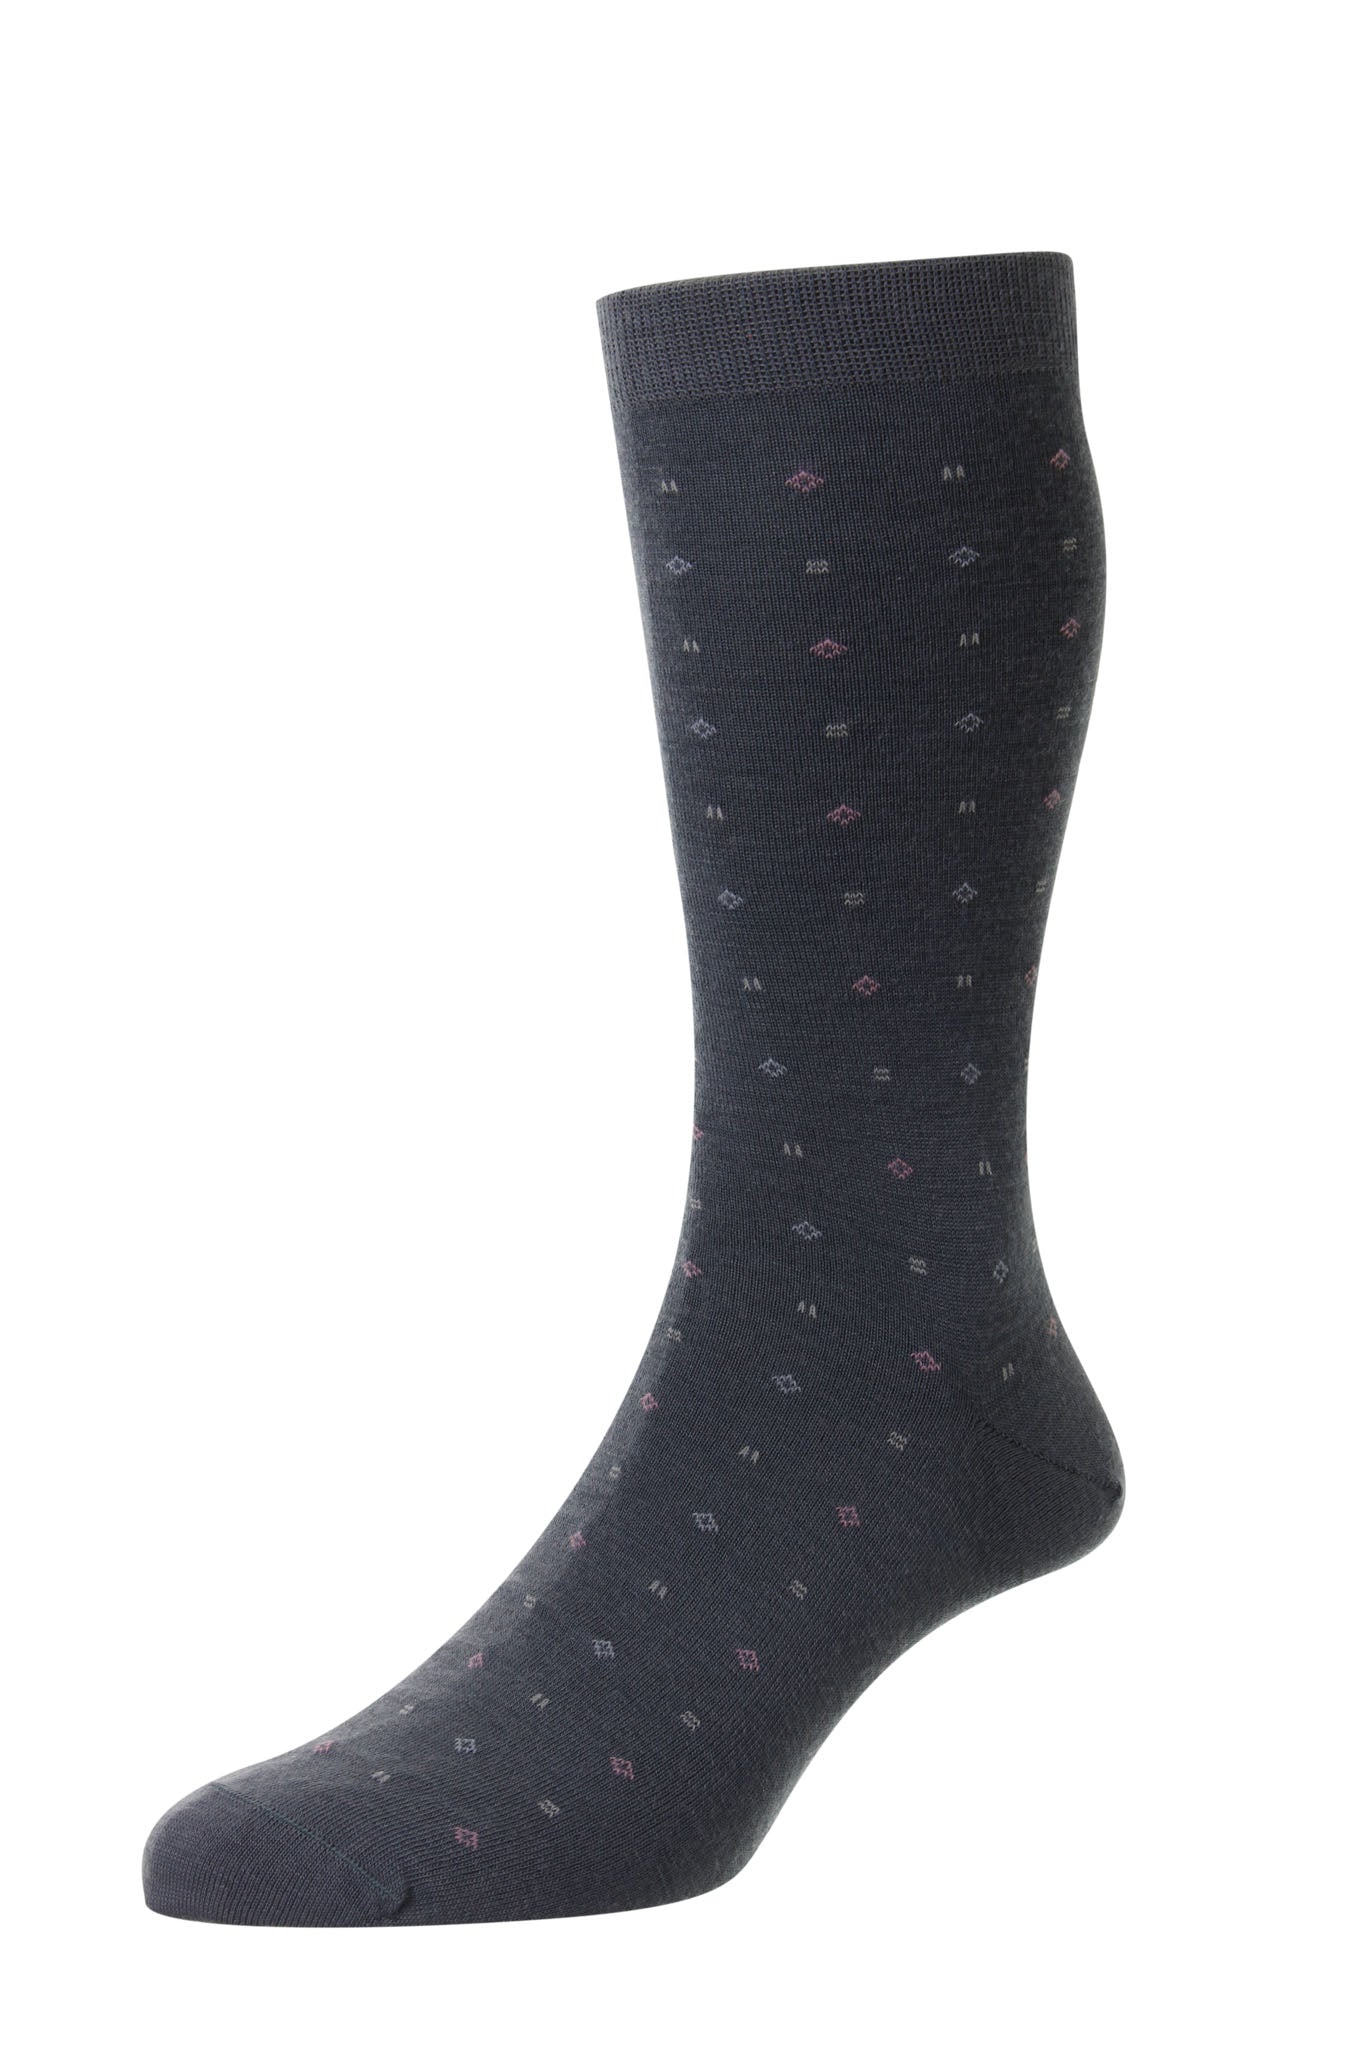 Lewisham Motif Merino Wool Socks